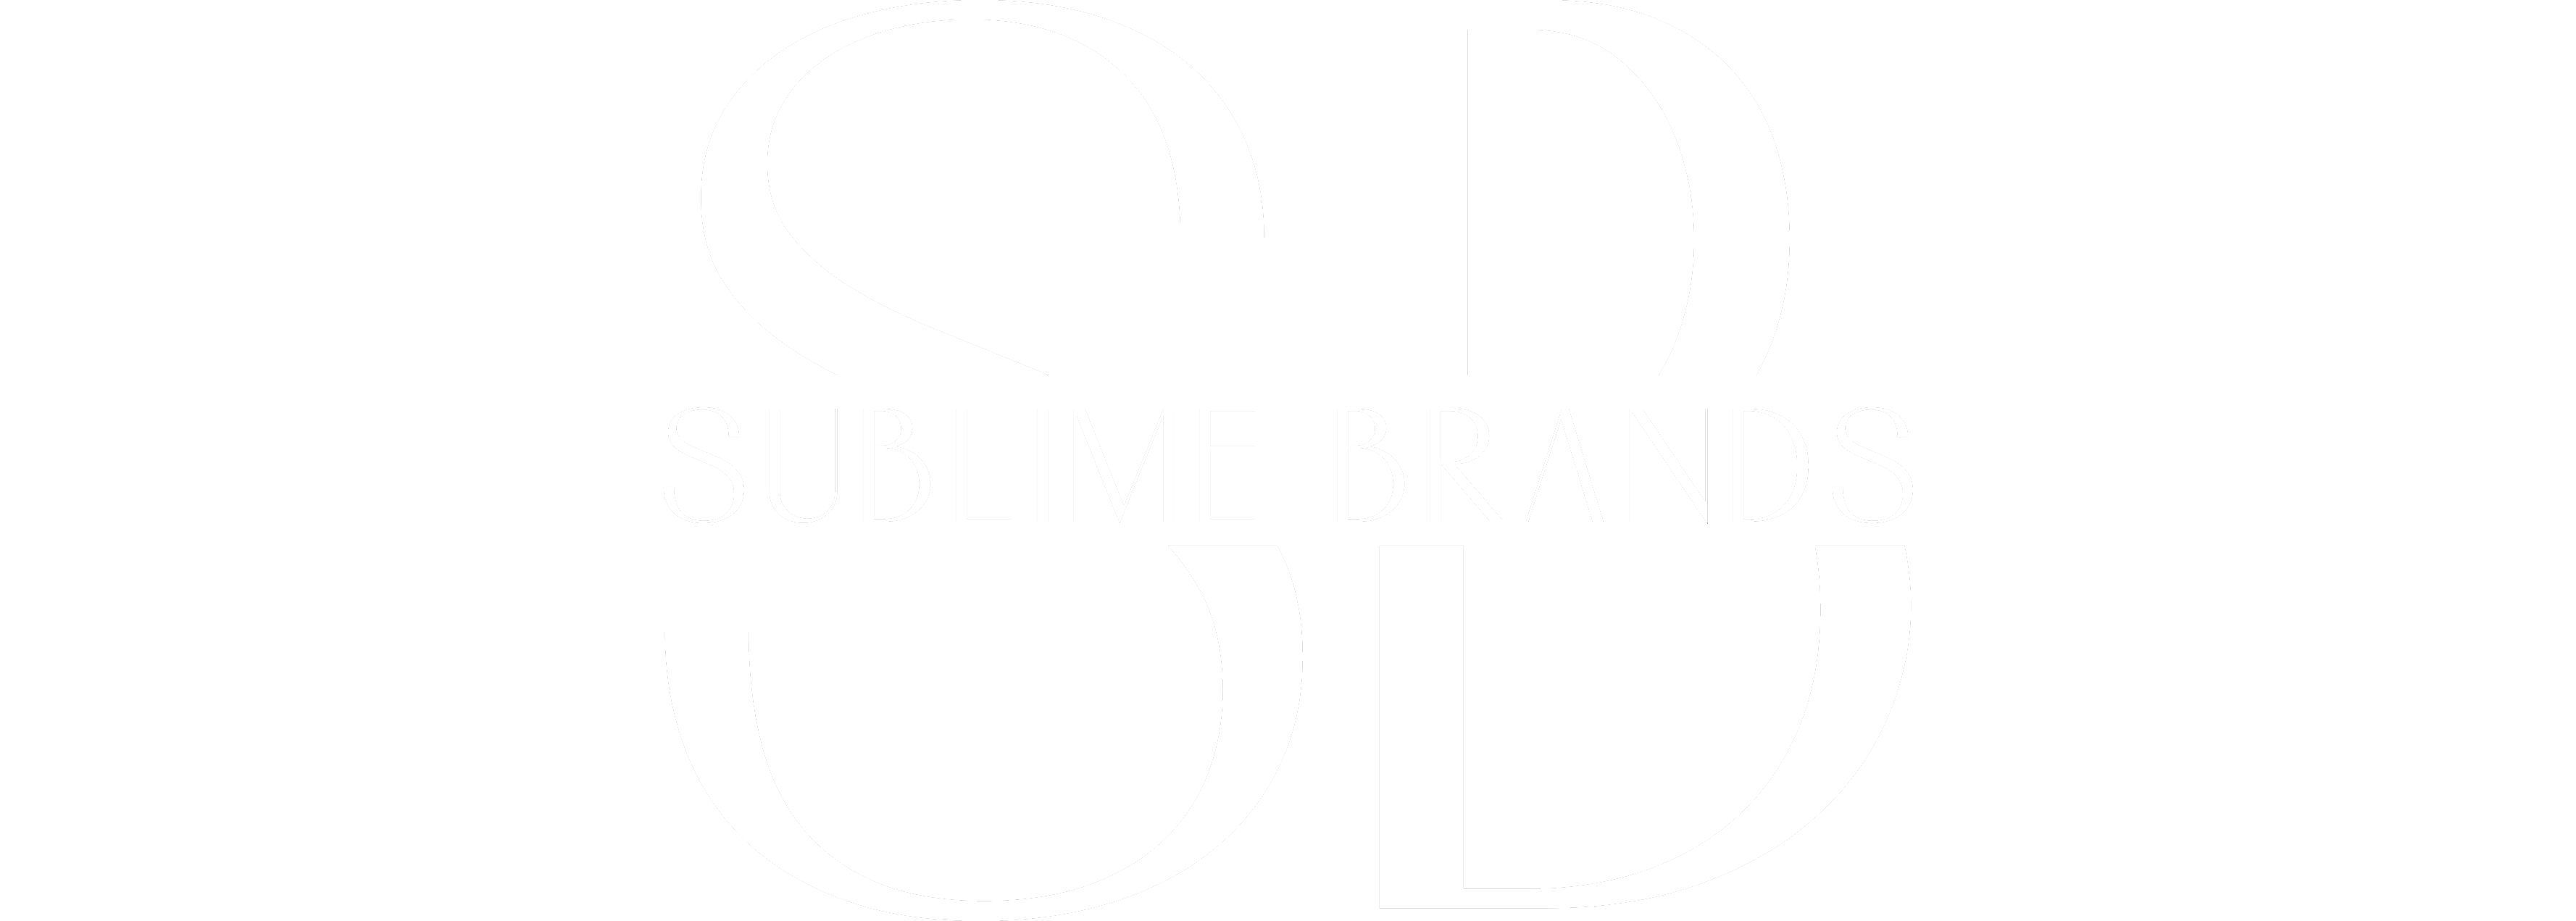 Sublime Brands logo_wh